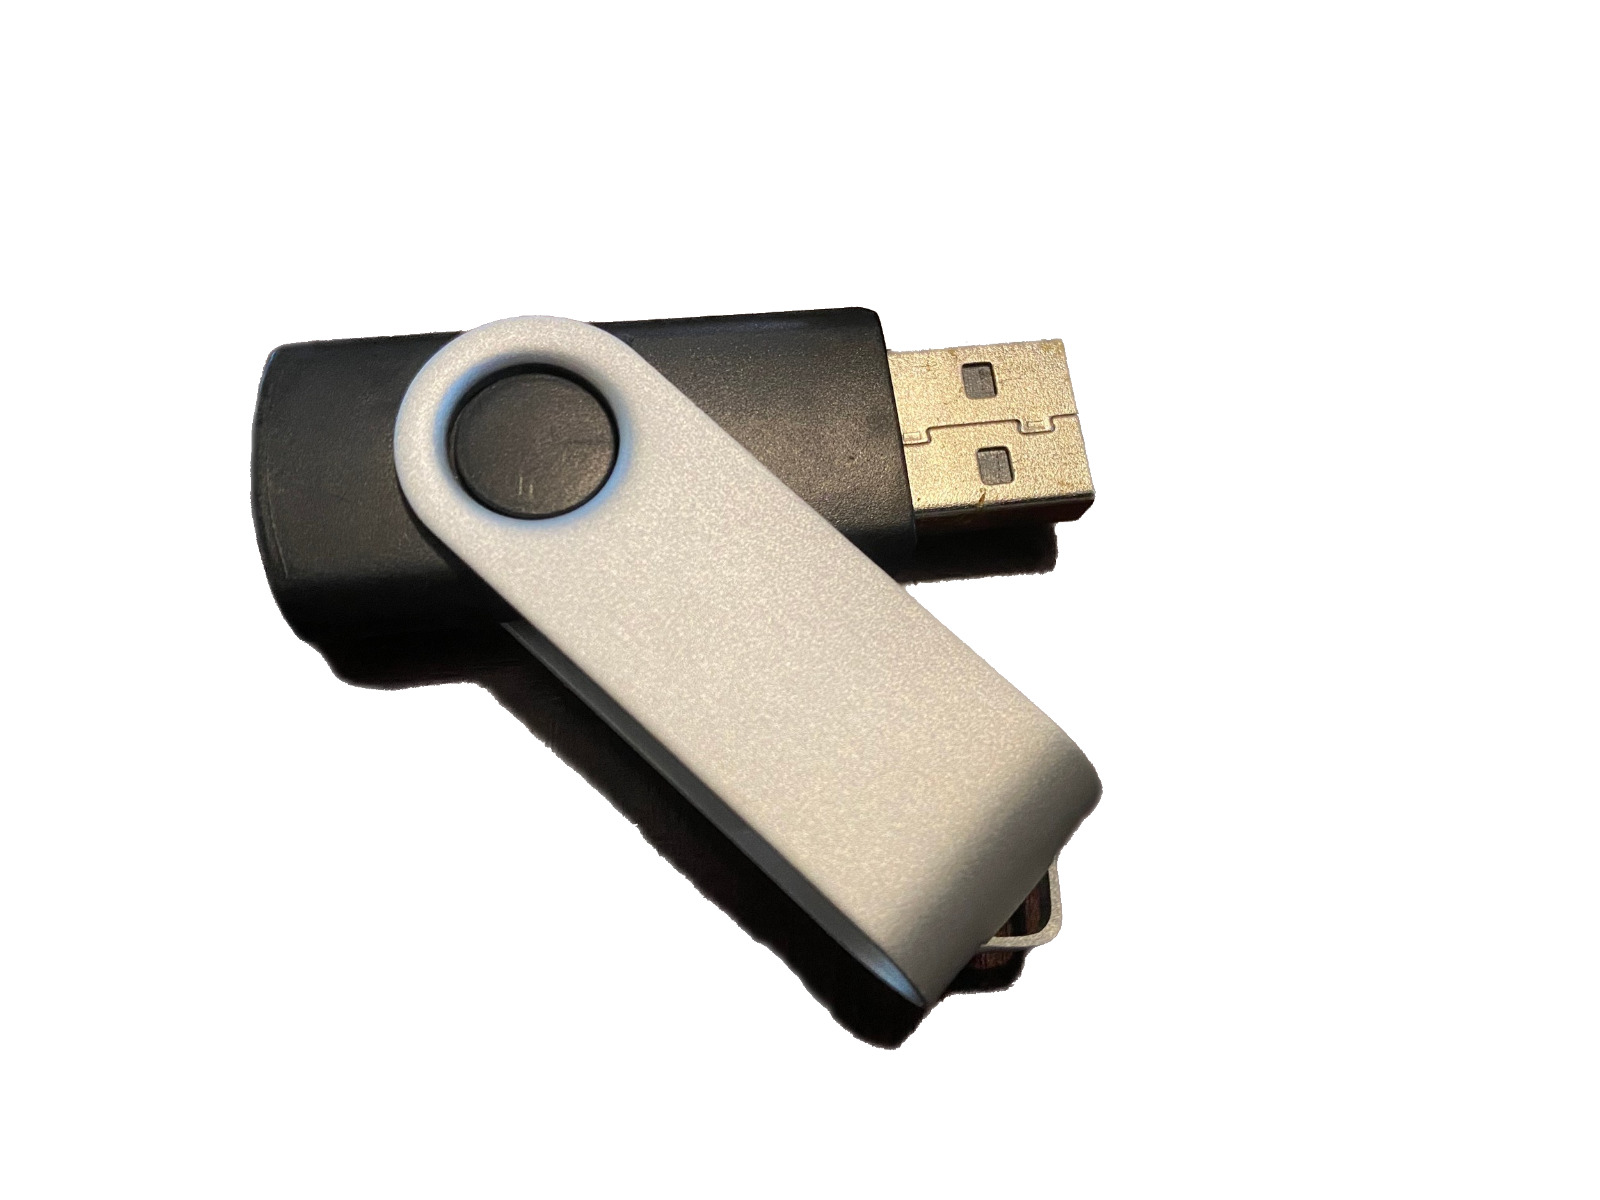 Ubuntu Linux  23.10 Live OS 8 GB Bootable USB Flash Drive( 23.10 Newest Version)